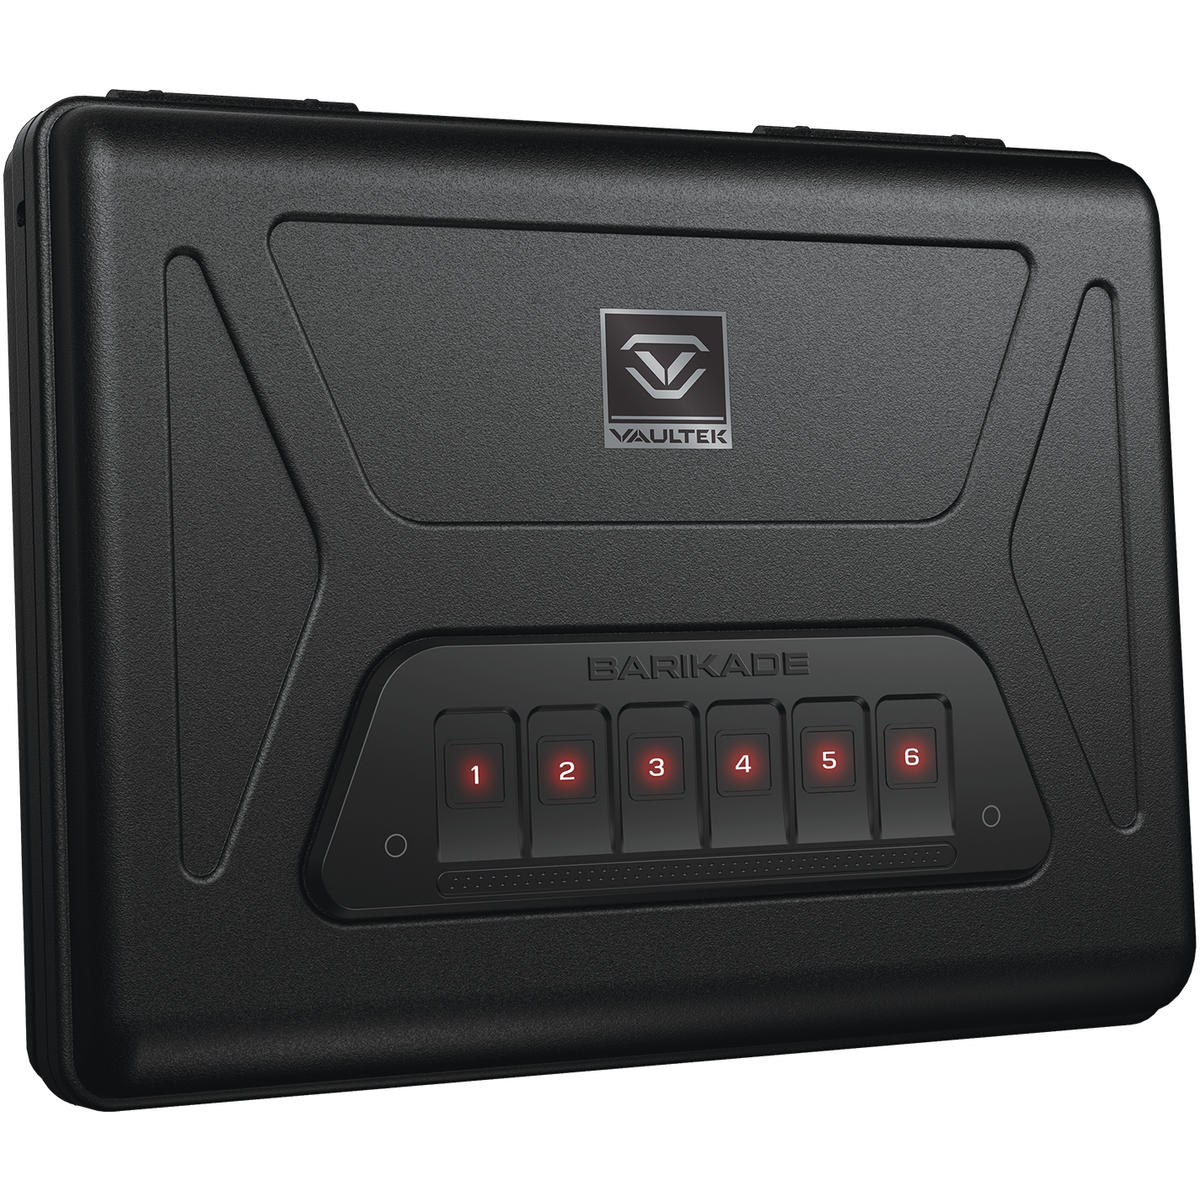 Vaultek - Barikade Series 2 Compact Rugged Biometric and Backlit Keypad Gun Safe